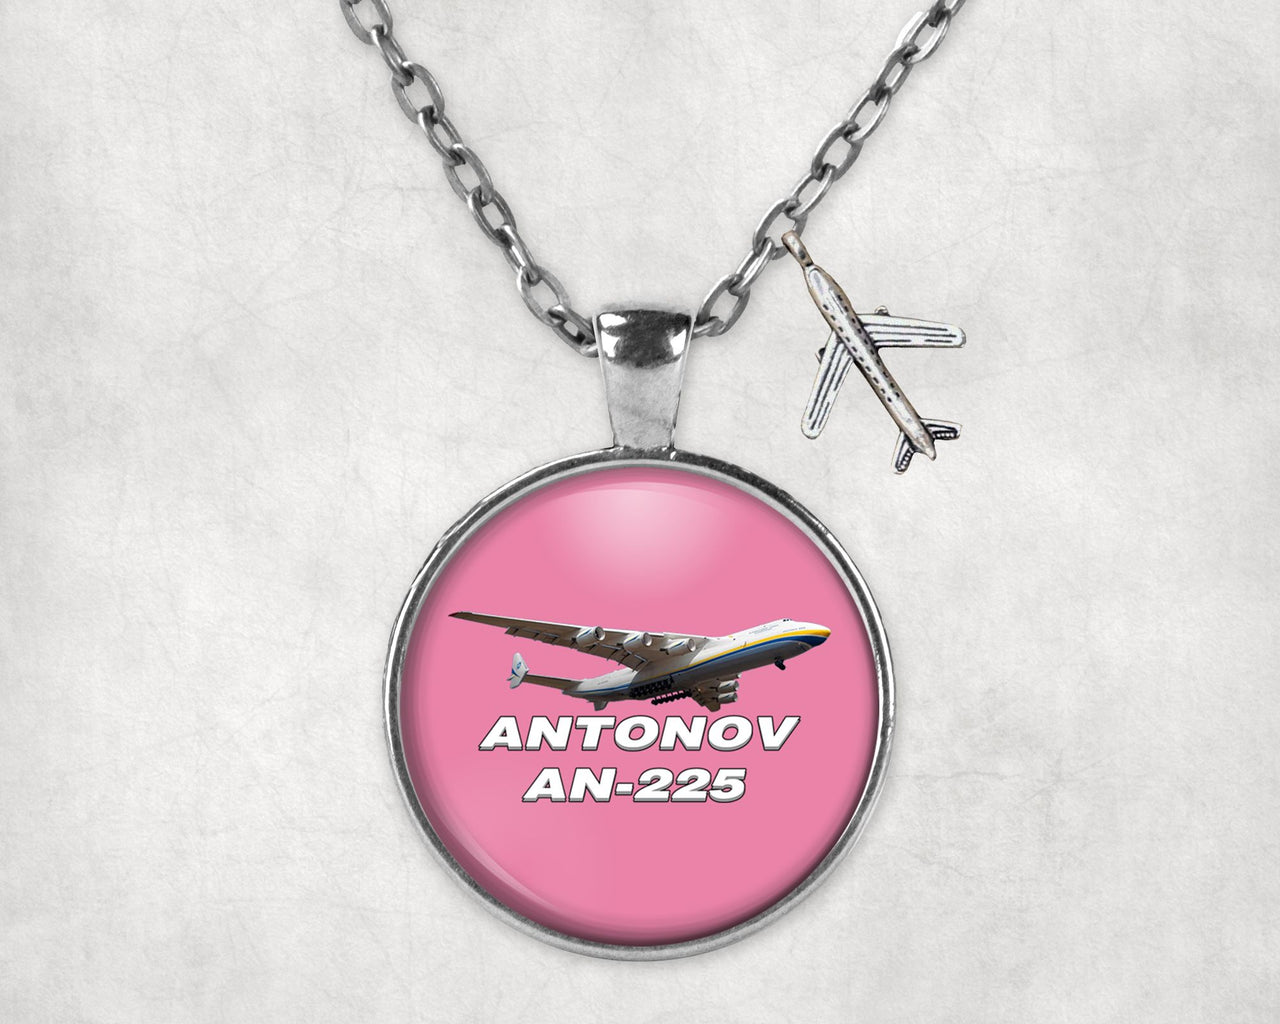 Antonov AN-225 (15) Designed Necklaces